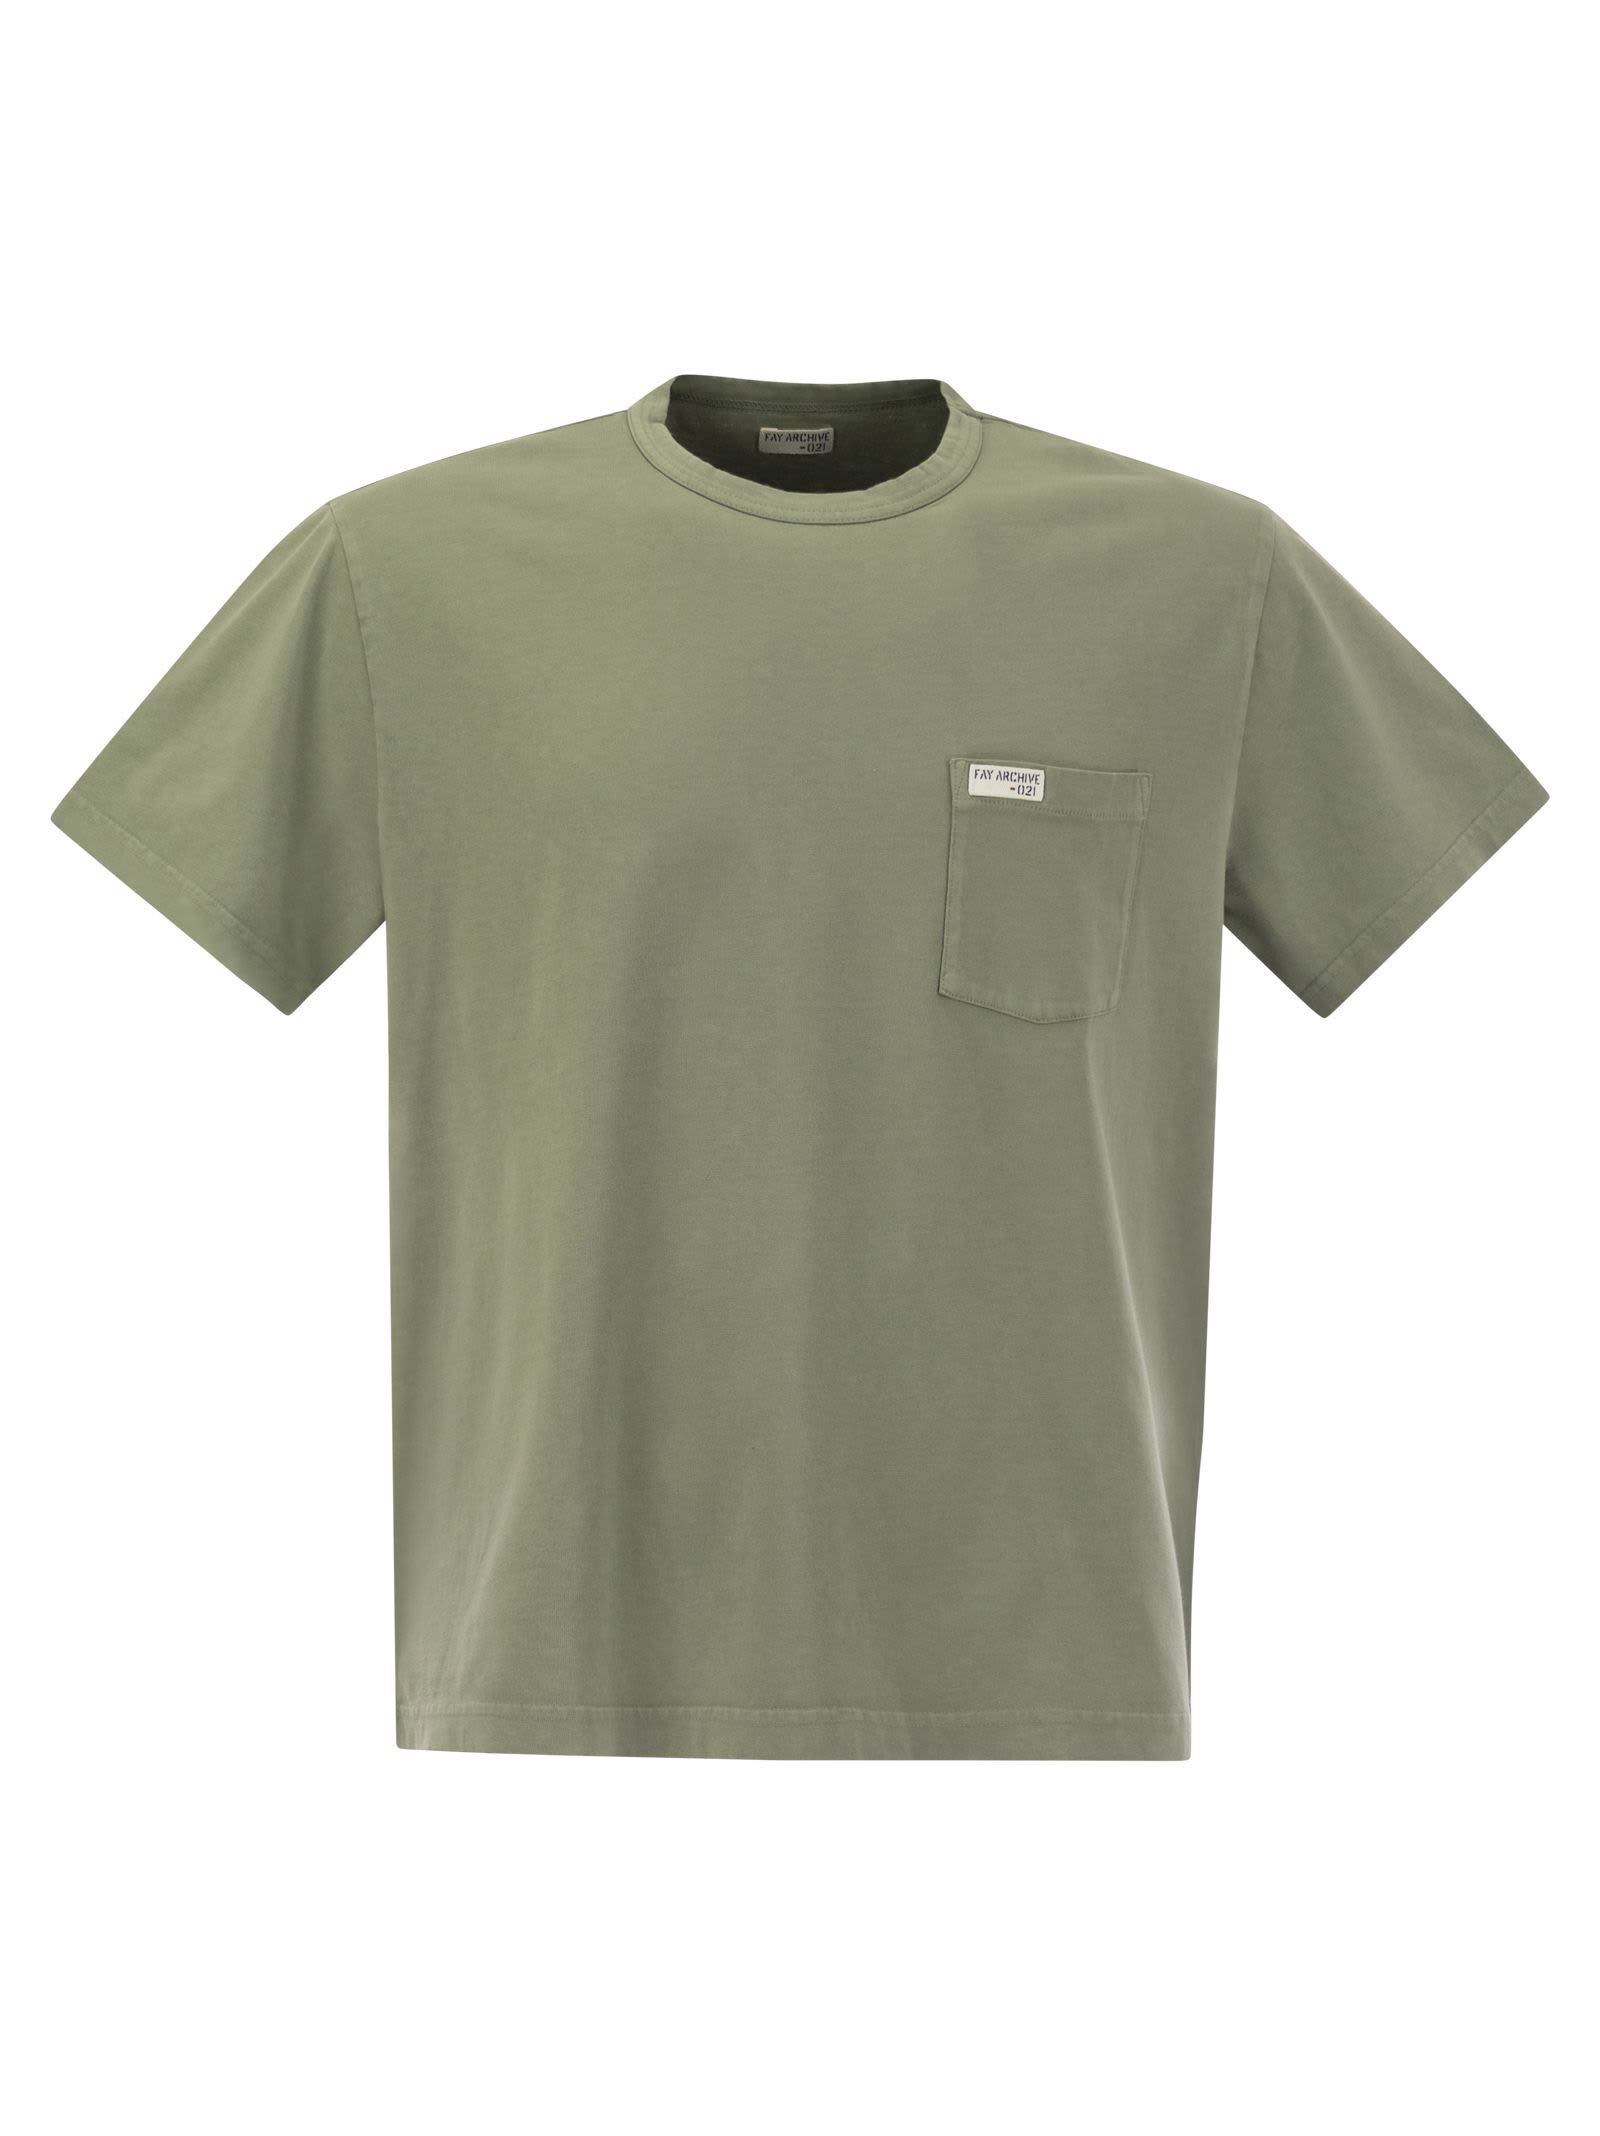 Green Military T-shirt